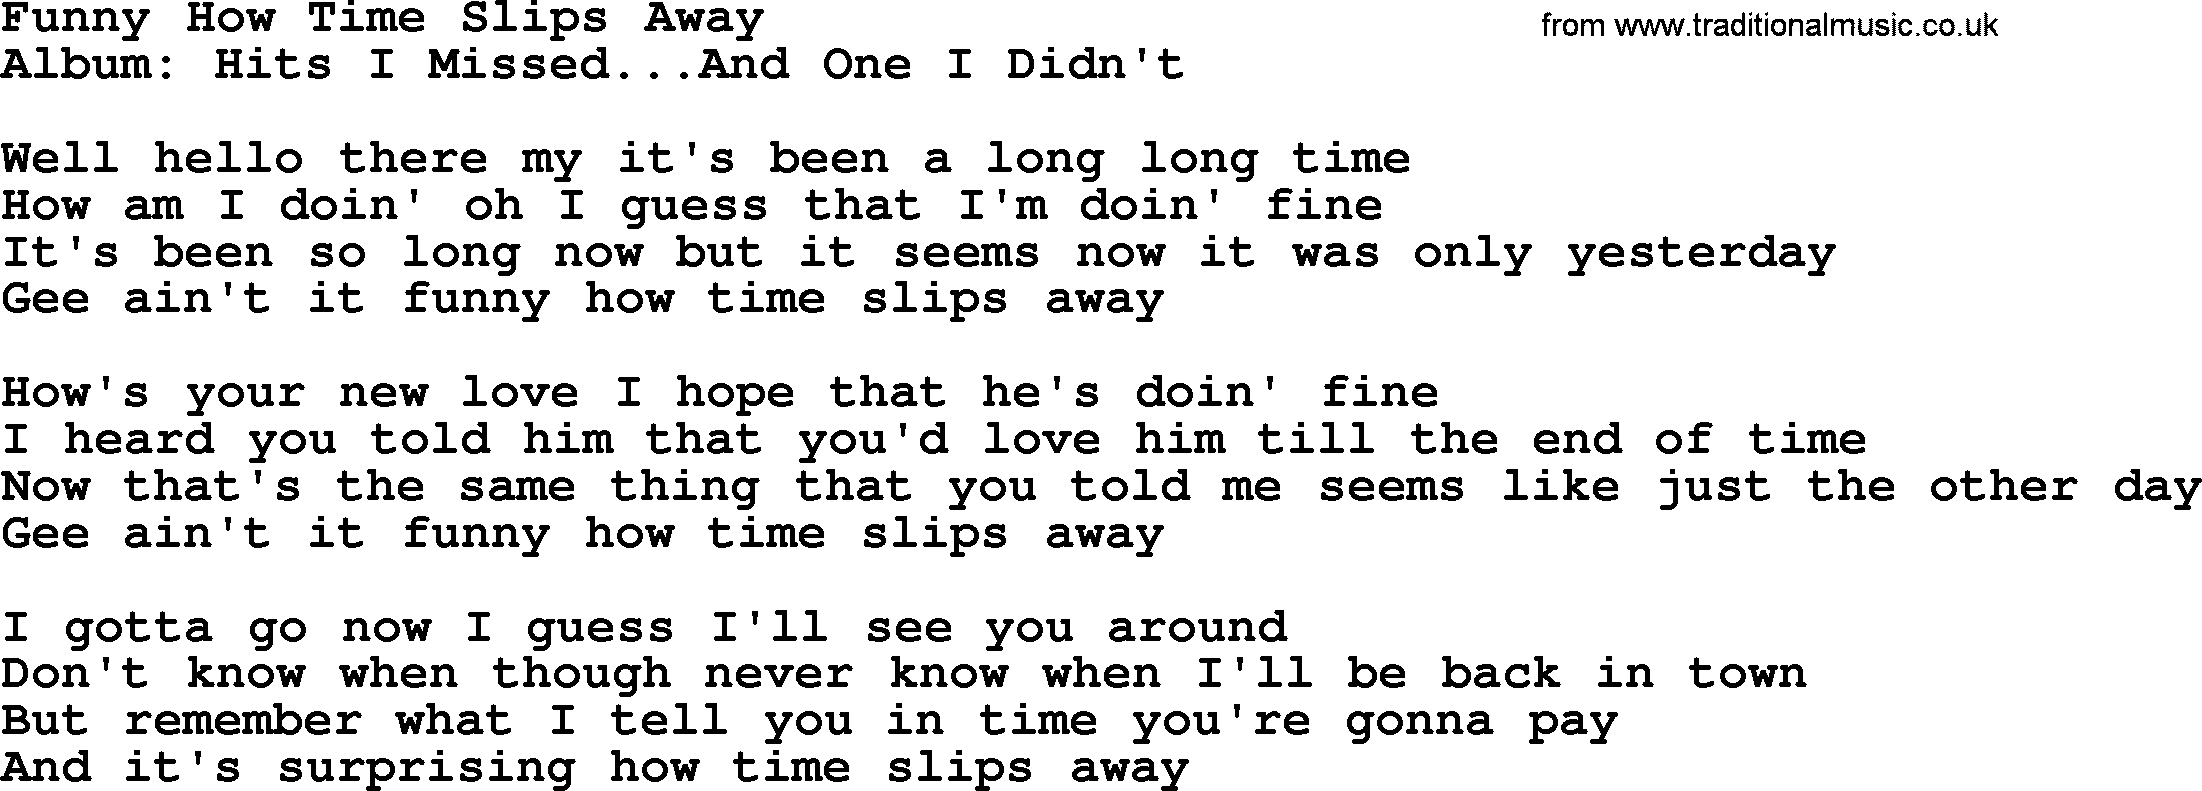 George Jones song: Funny How Time Slips Away, lyrics